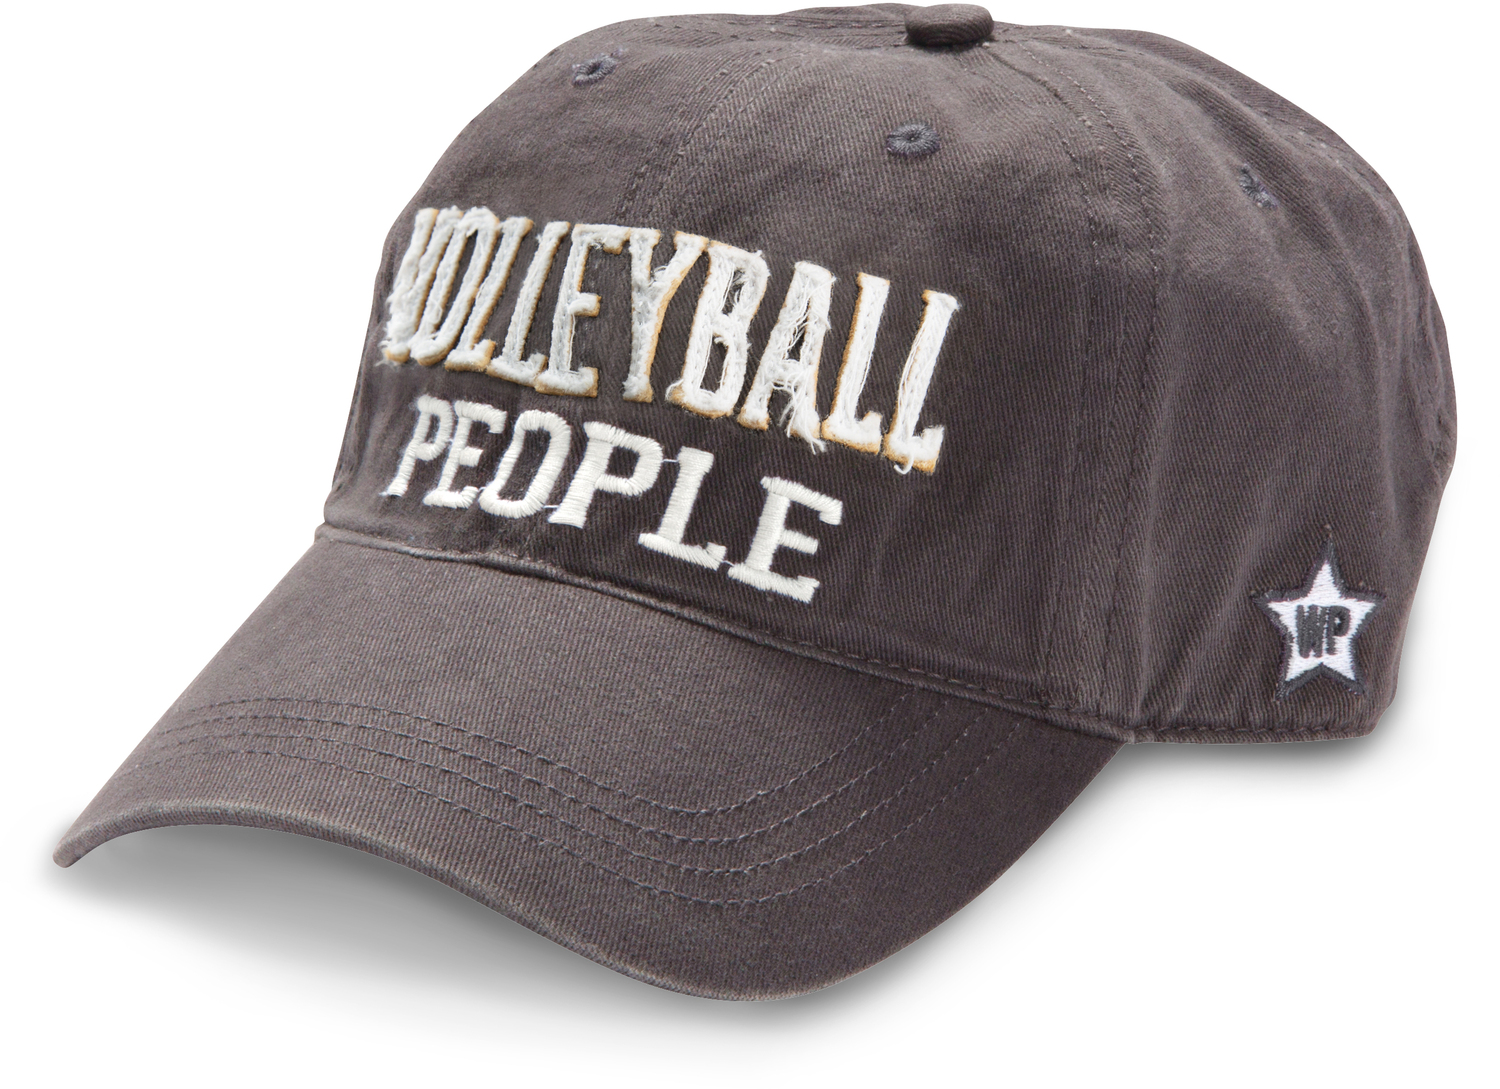 Volleyball People by We People - Volleyball People - Dark Gray Adjustable Hat